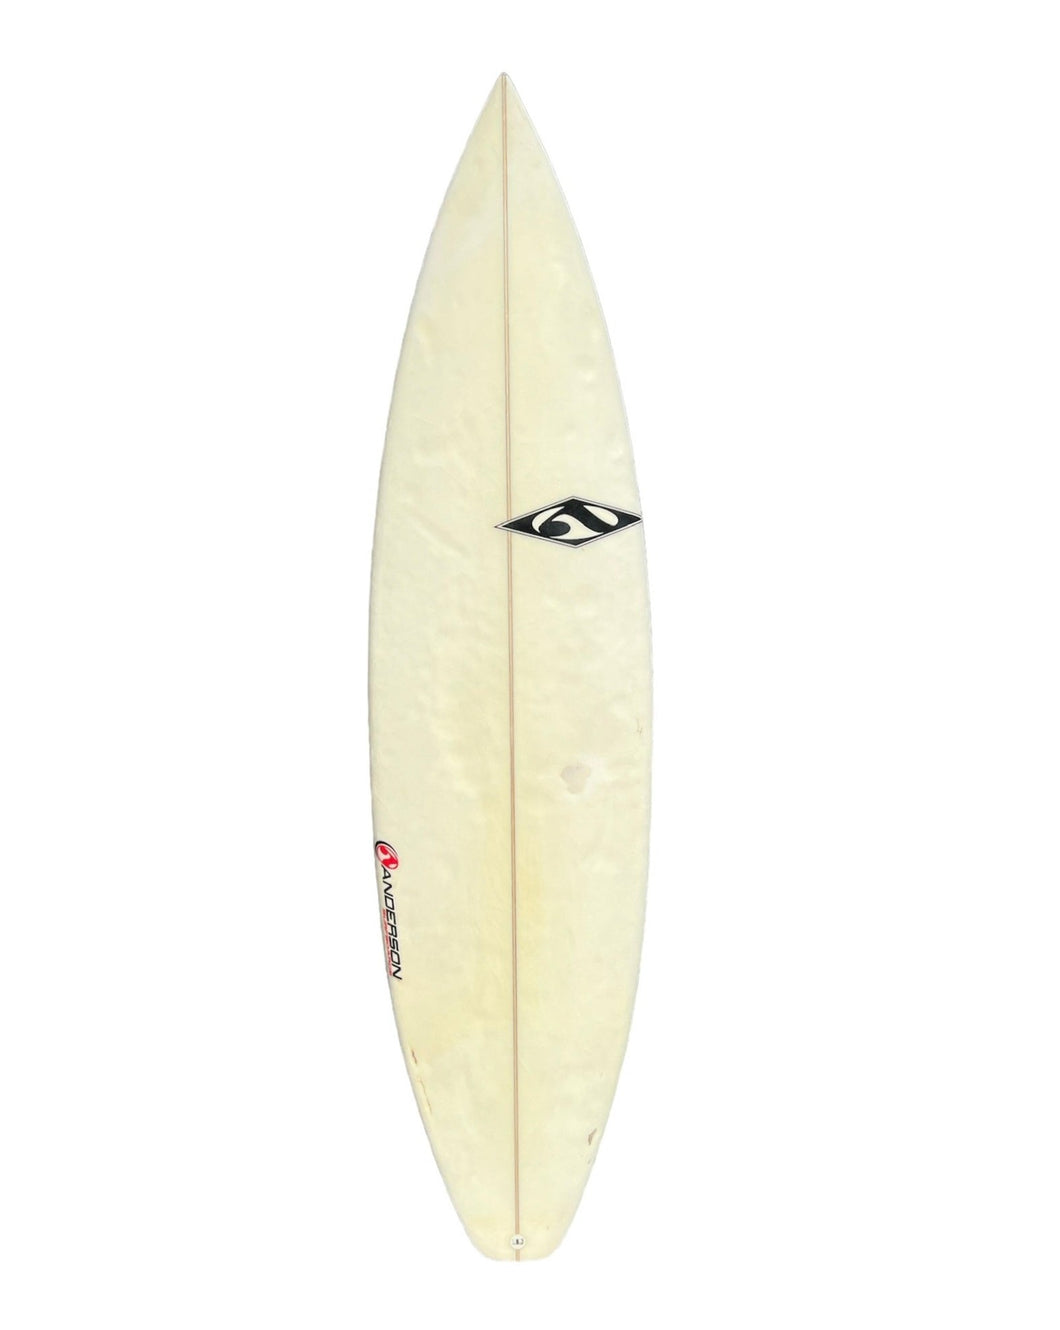 Anderson surfboard